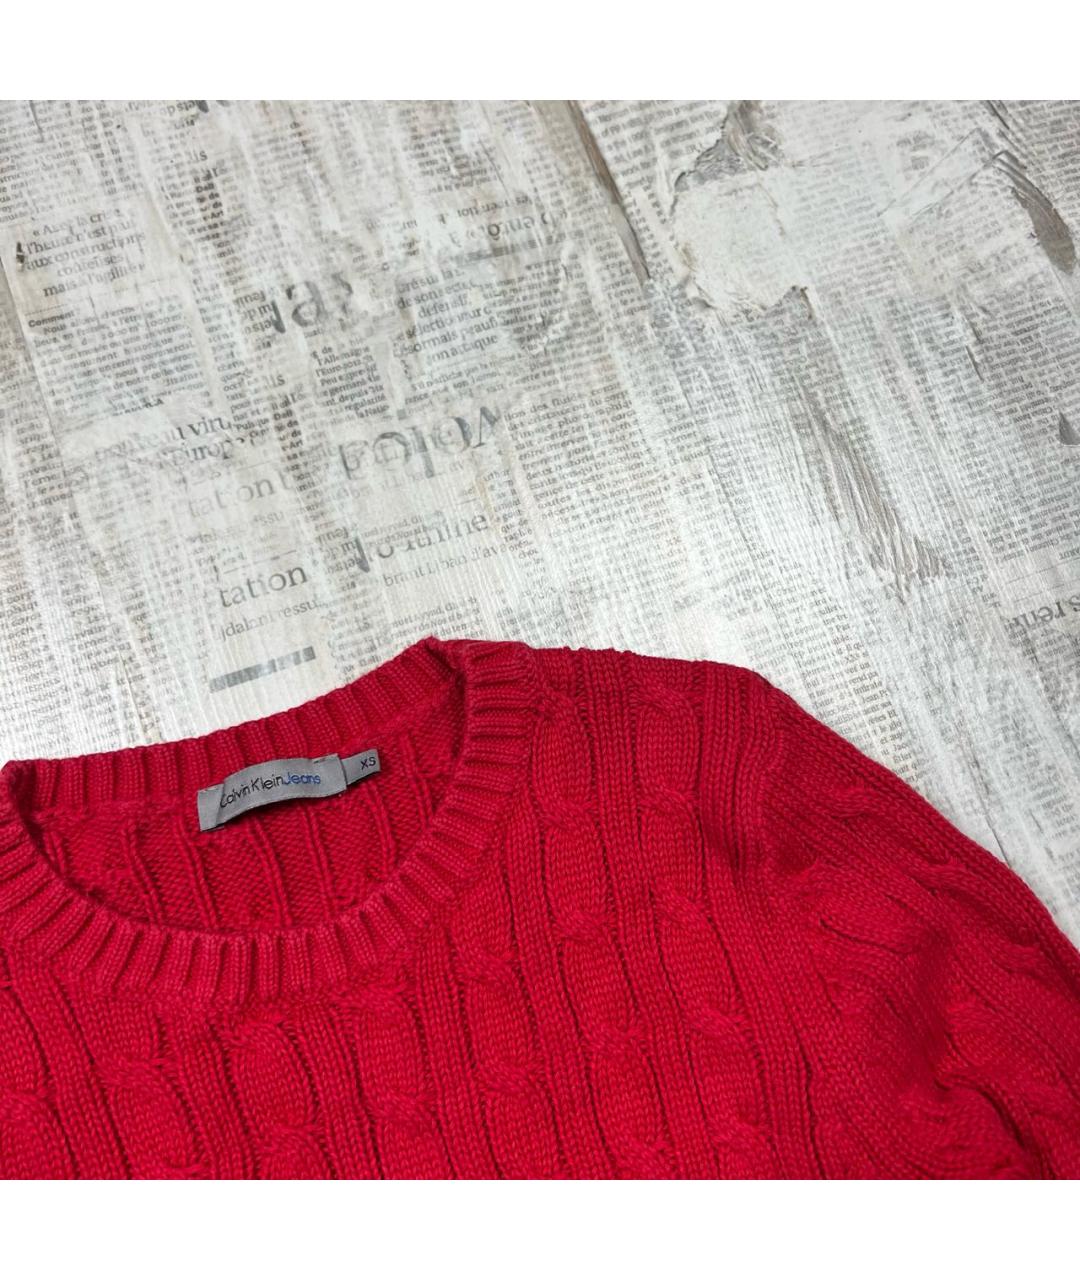 CALVIN KLEIN JEANS Красный хлопковый джемпер / свитер, фото 3